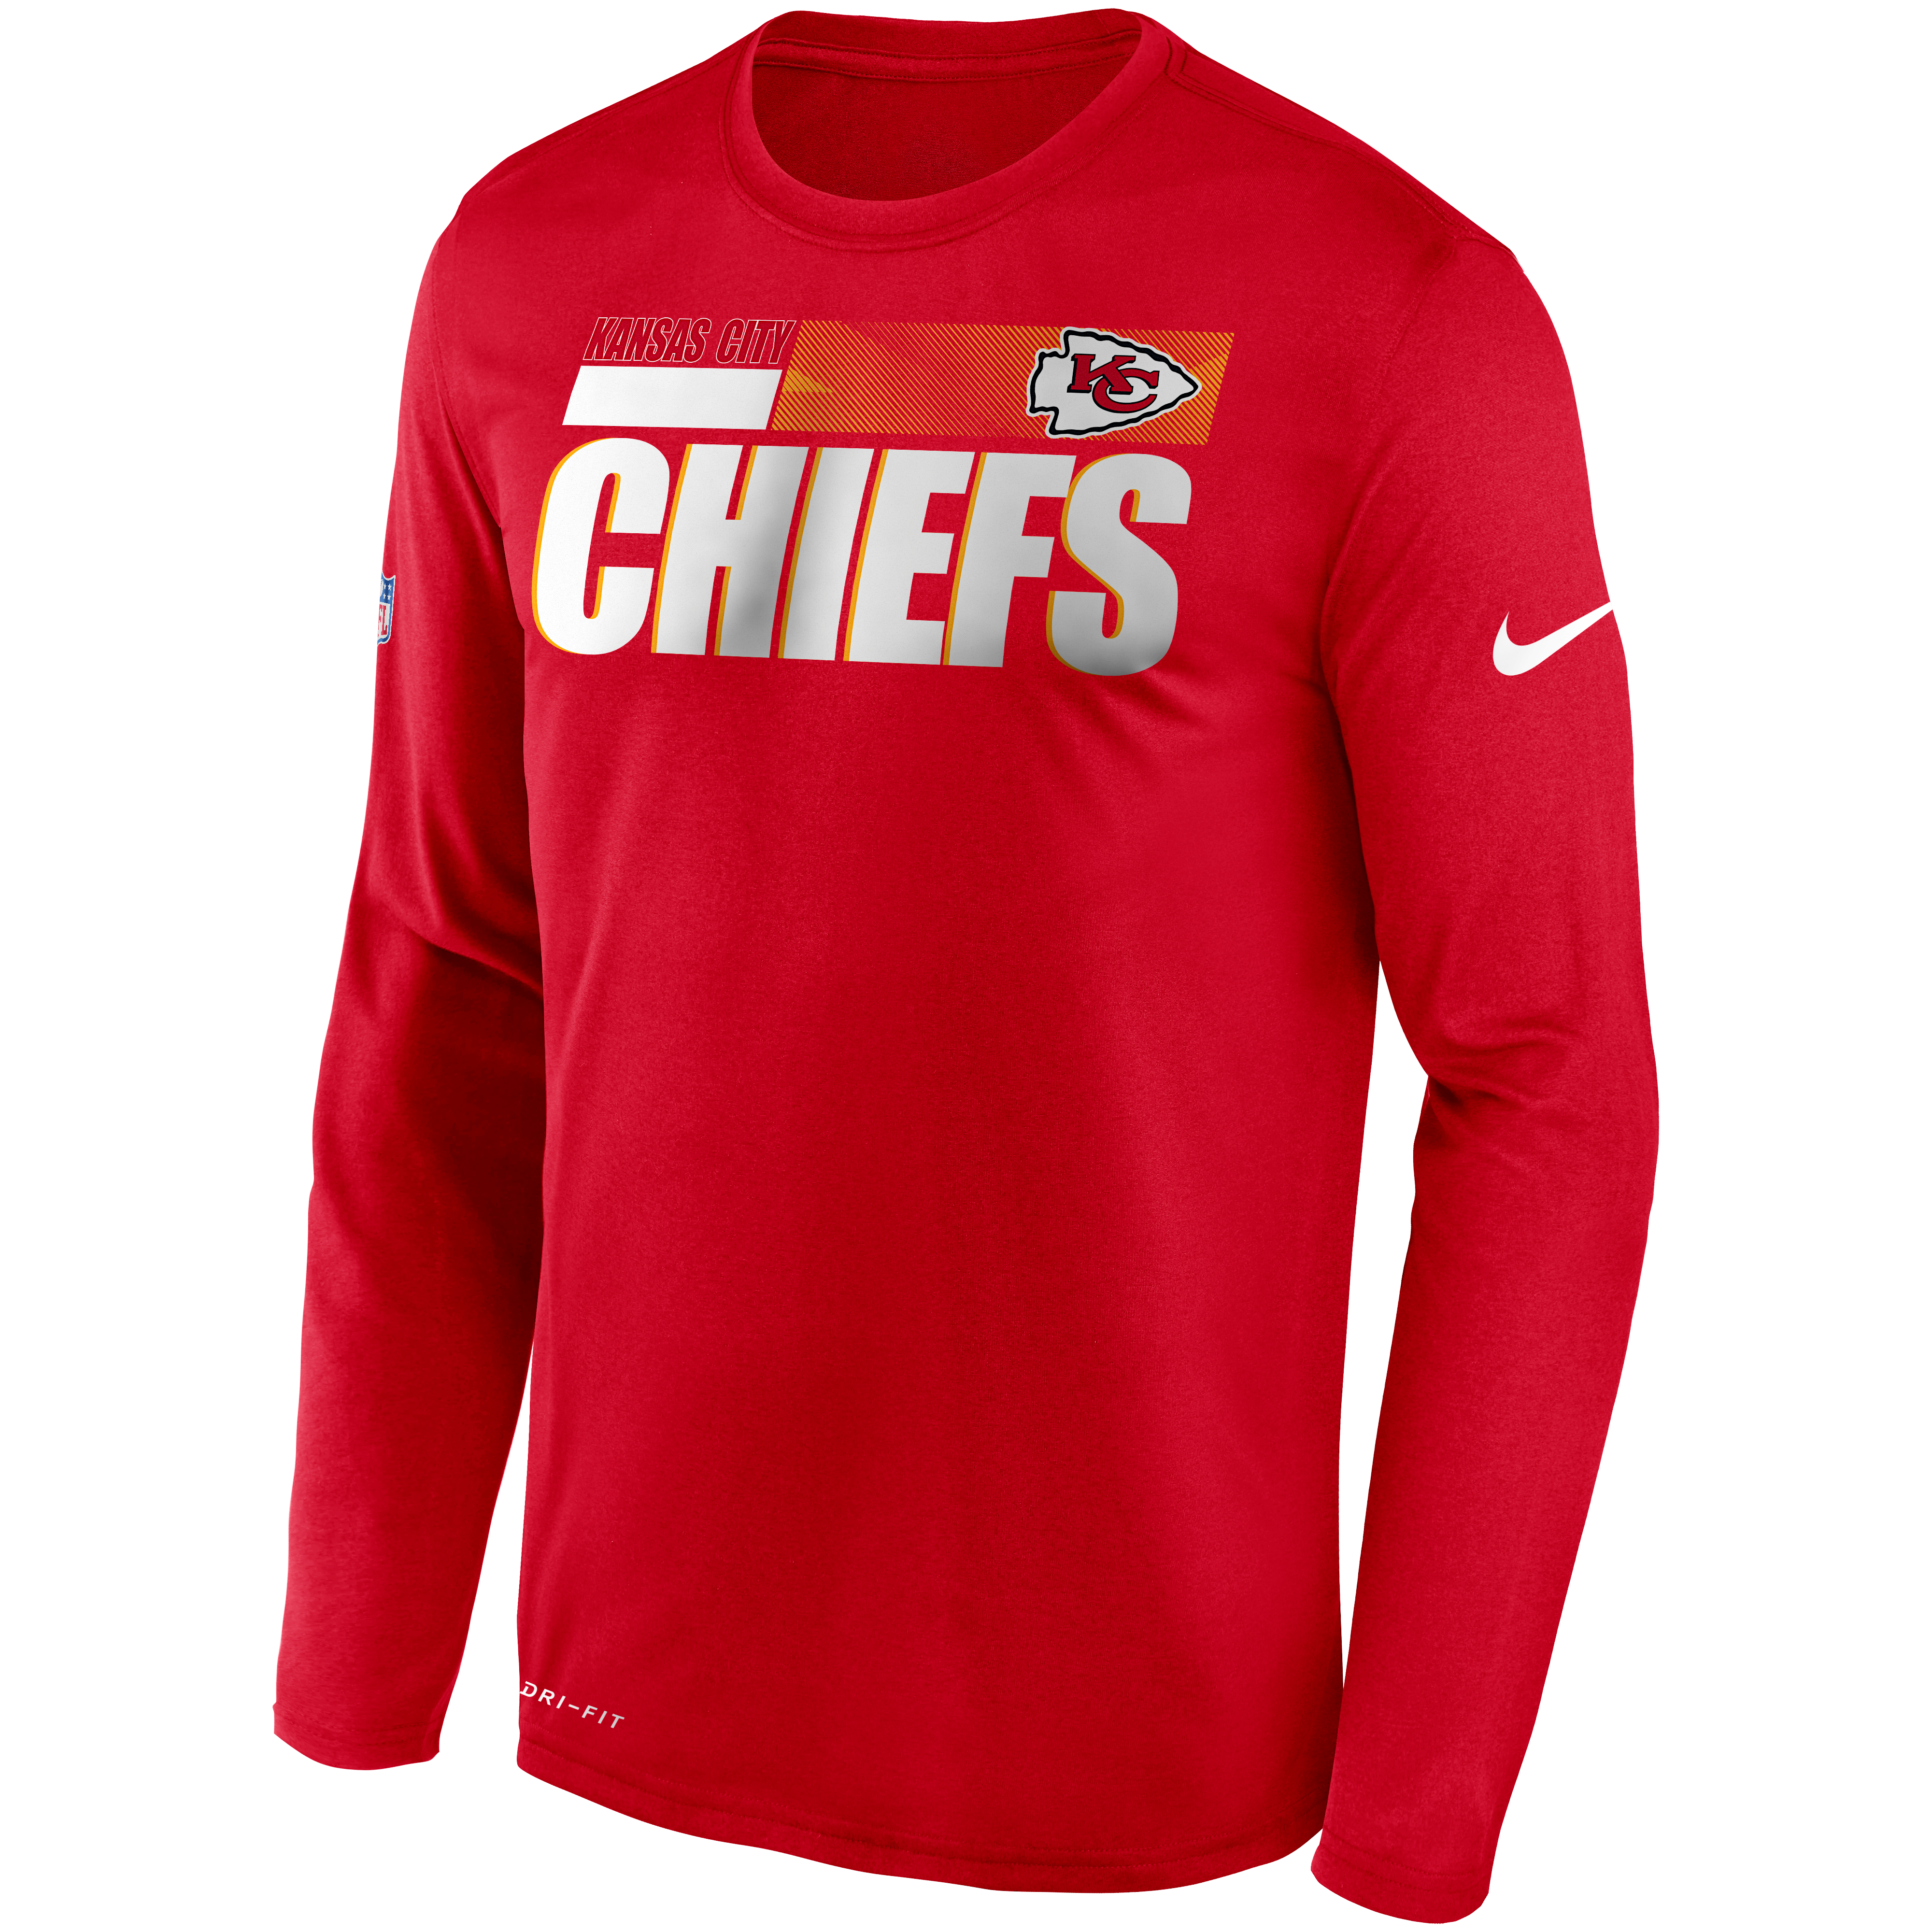 chiefs long sleeve jersey